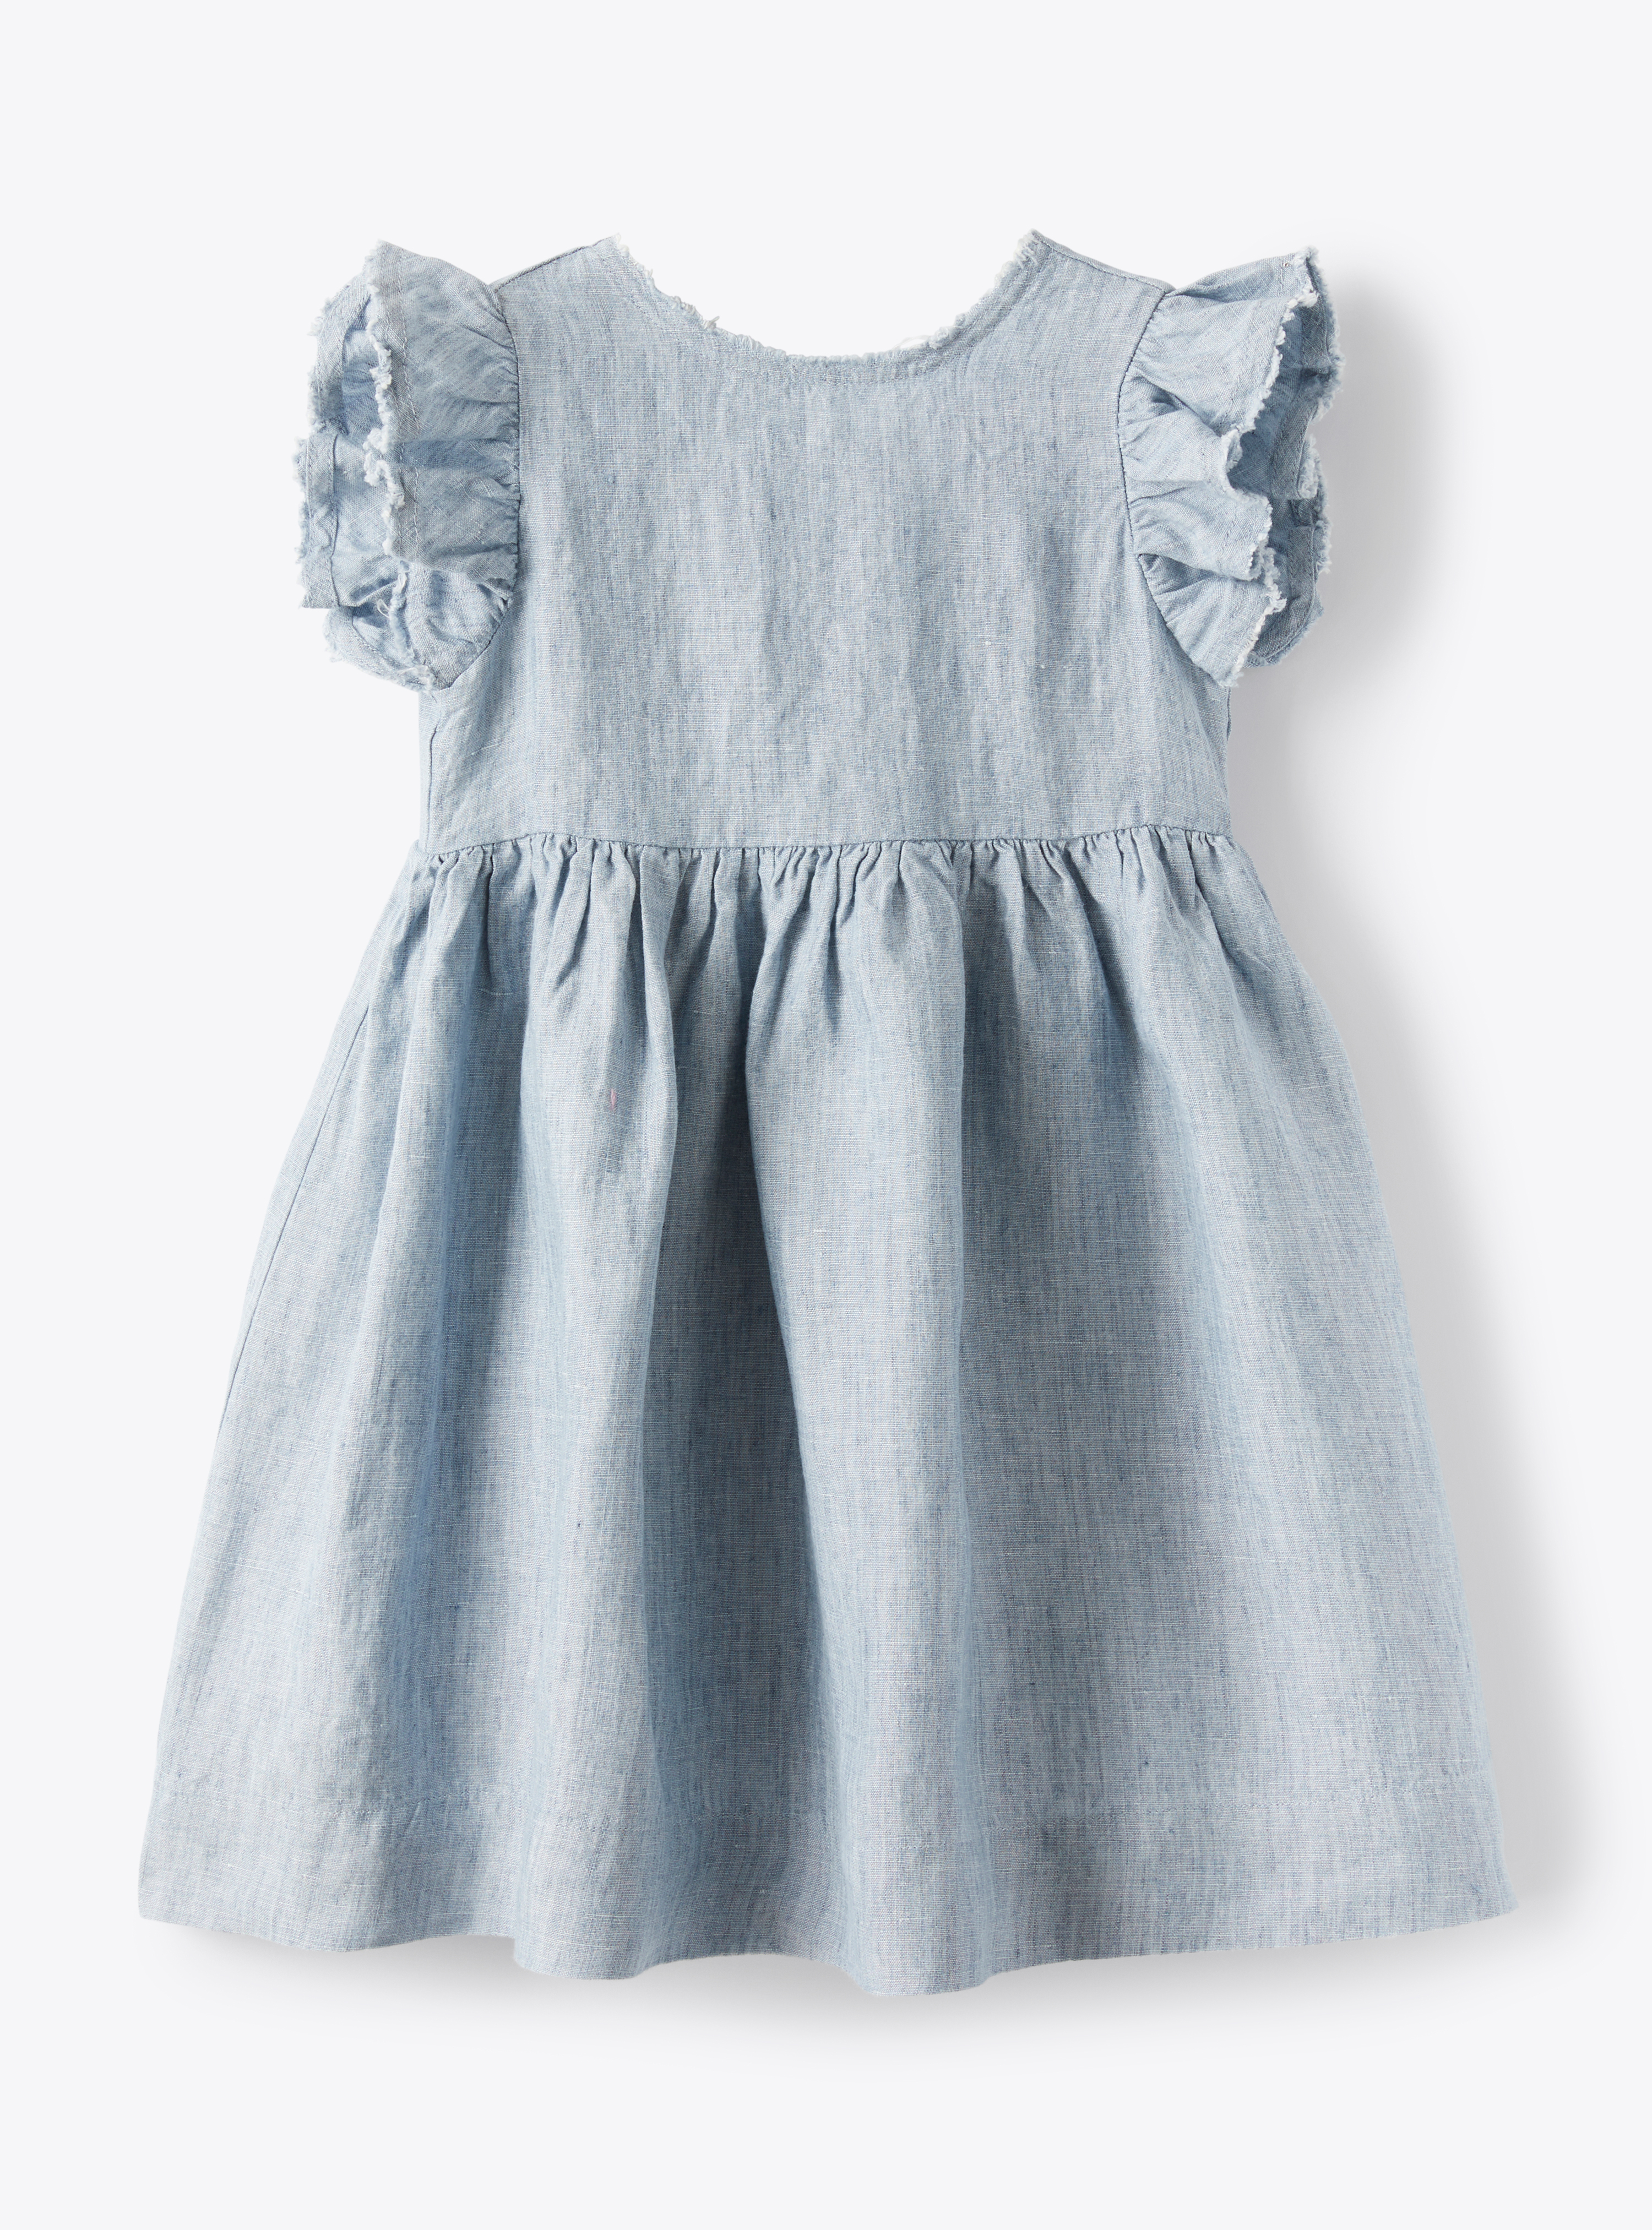 Linen dress with bow detail in mélange sky blue - Light blue | Il Gufo